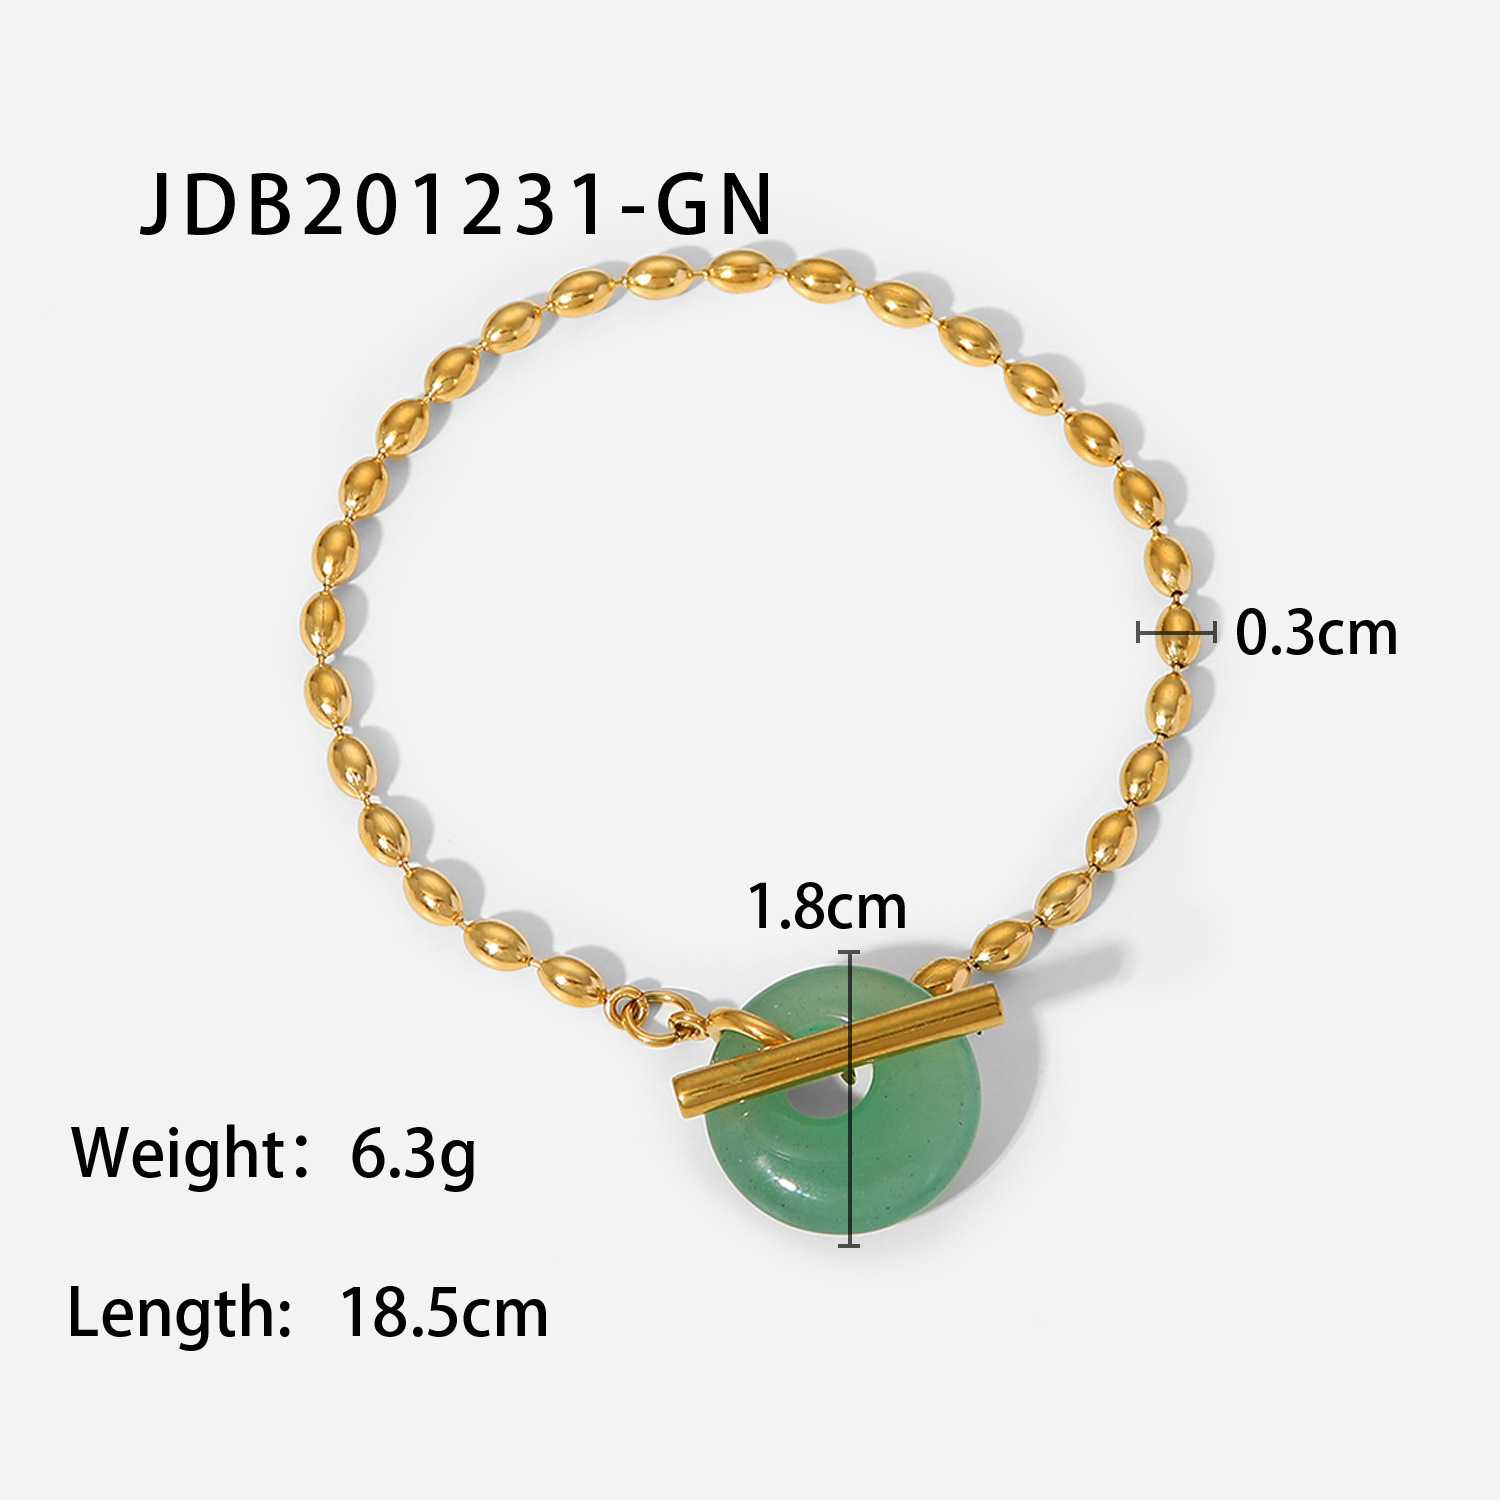 JDB201231-GN